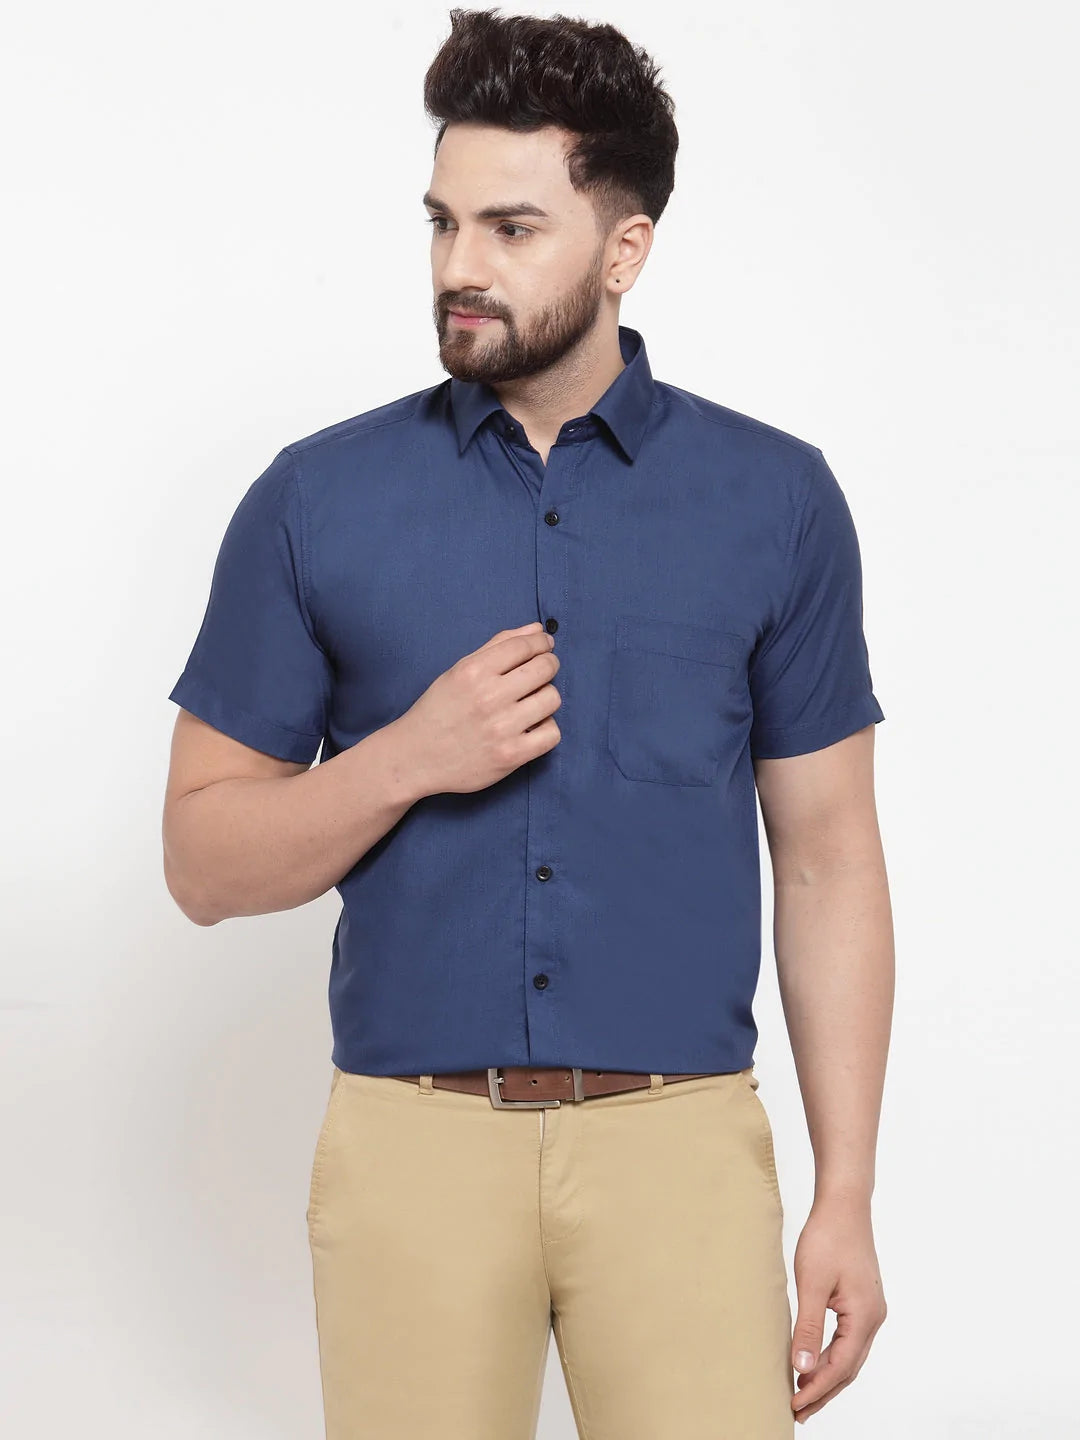 Jainish Blue Men's Cotton Half Sleeves Solid Formal Shirts ( SF 754Peacock )